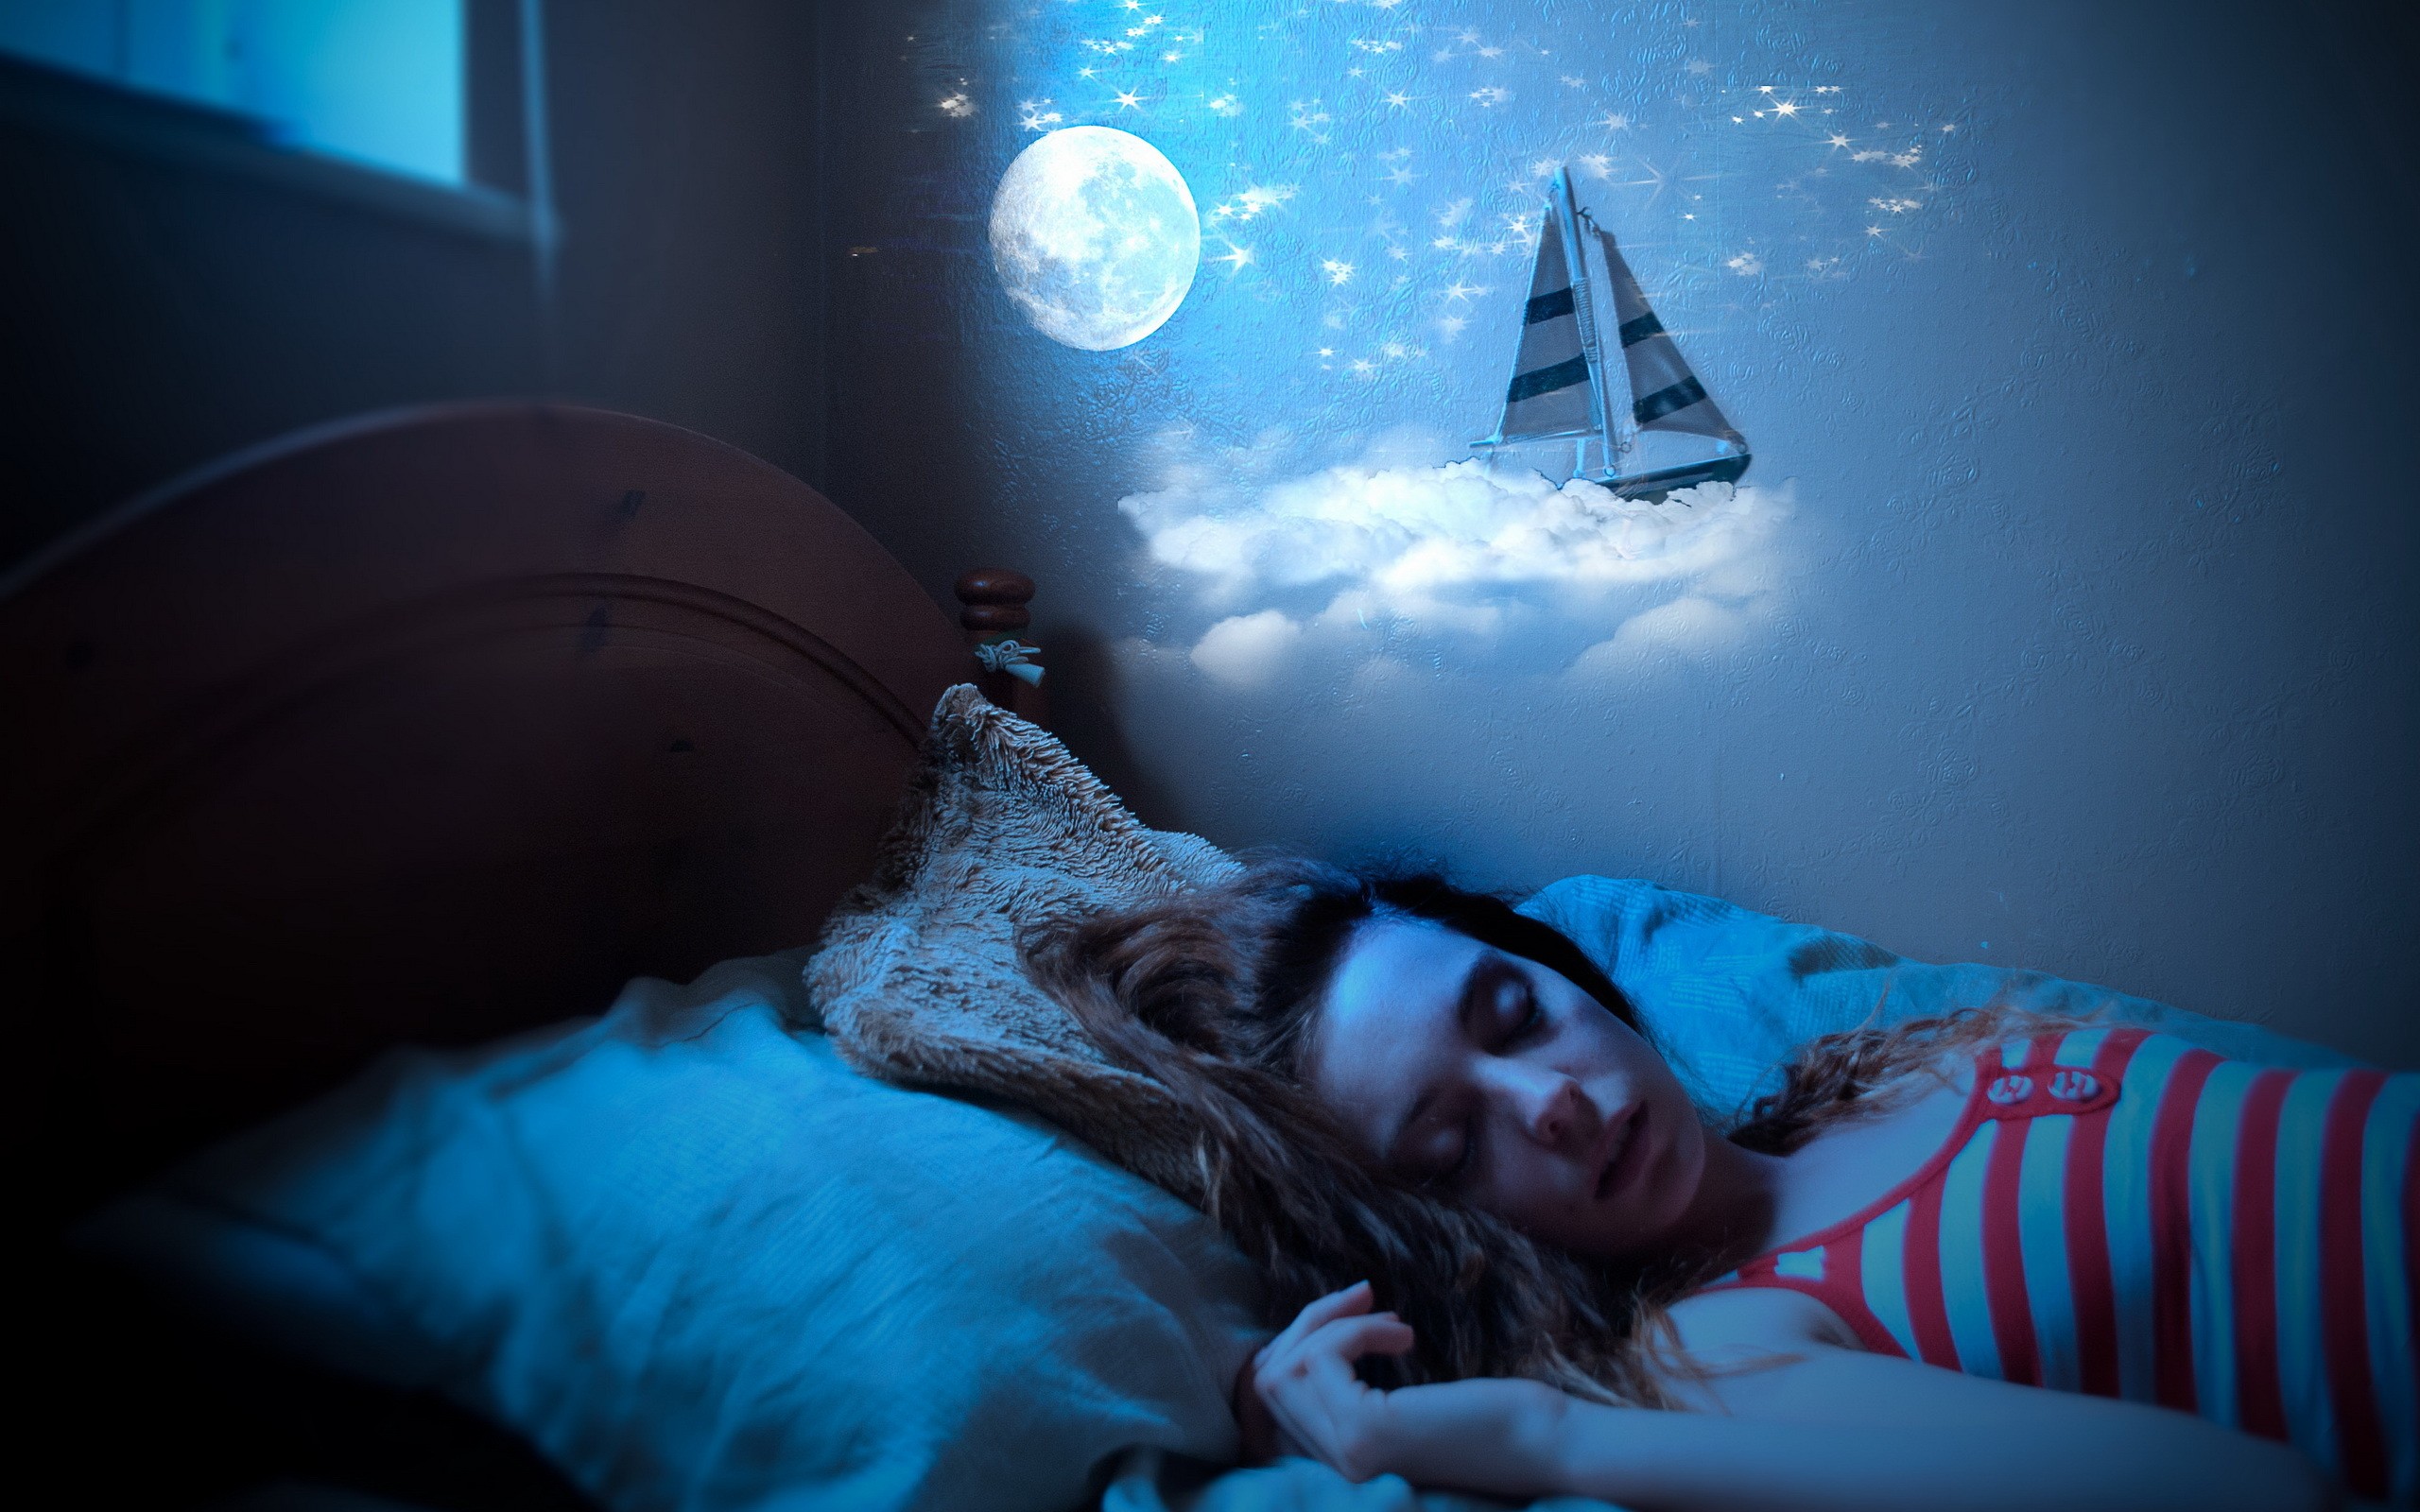 People 2560x1600 fantasy art women sleeping women indoors in bed bed boat Moon sky clouds closed eyes striped clothing digital art